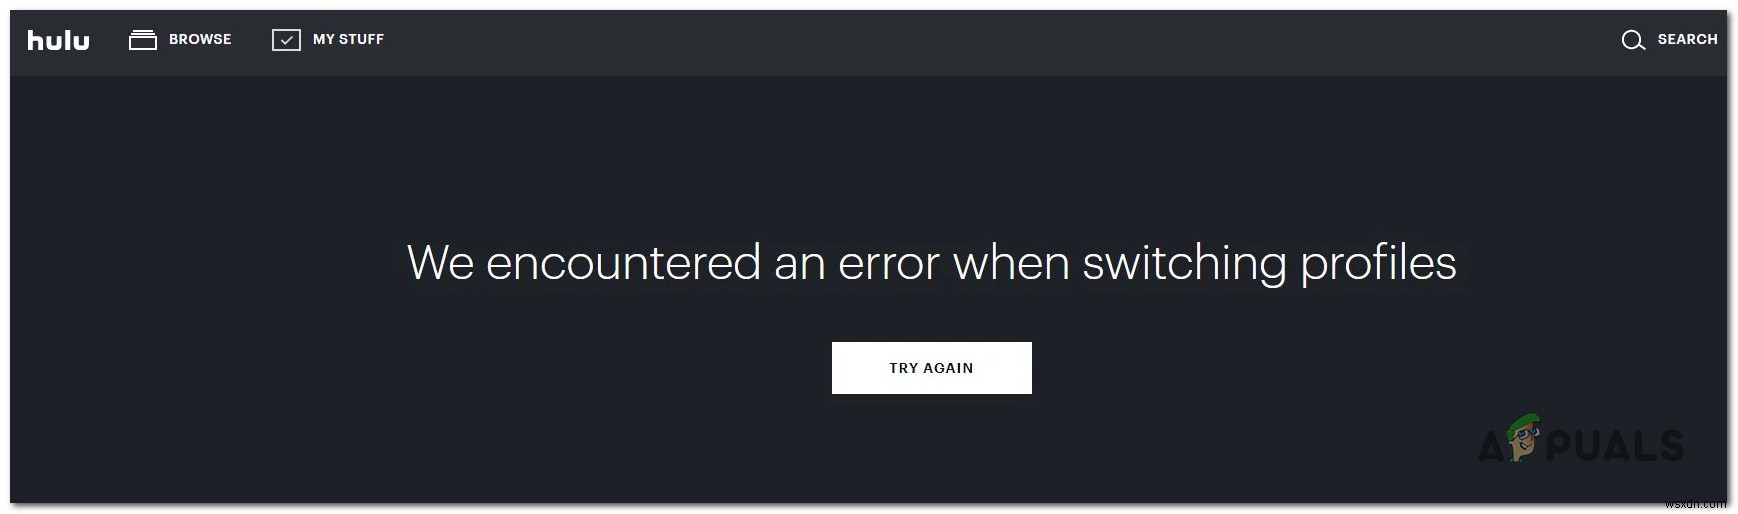 [FIX] Hulu 프로필 전환 시 오류가 발생했습니다. 